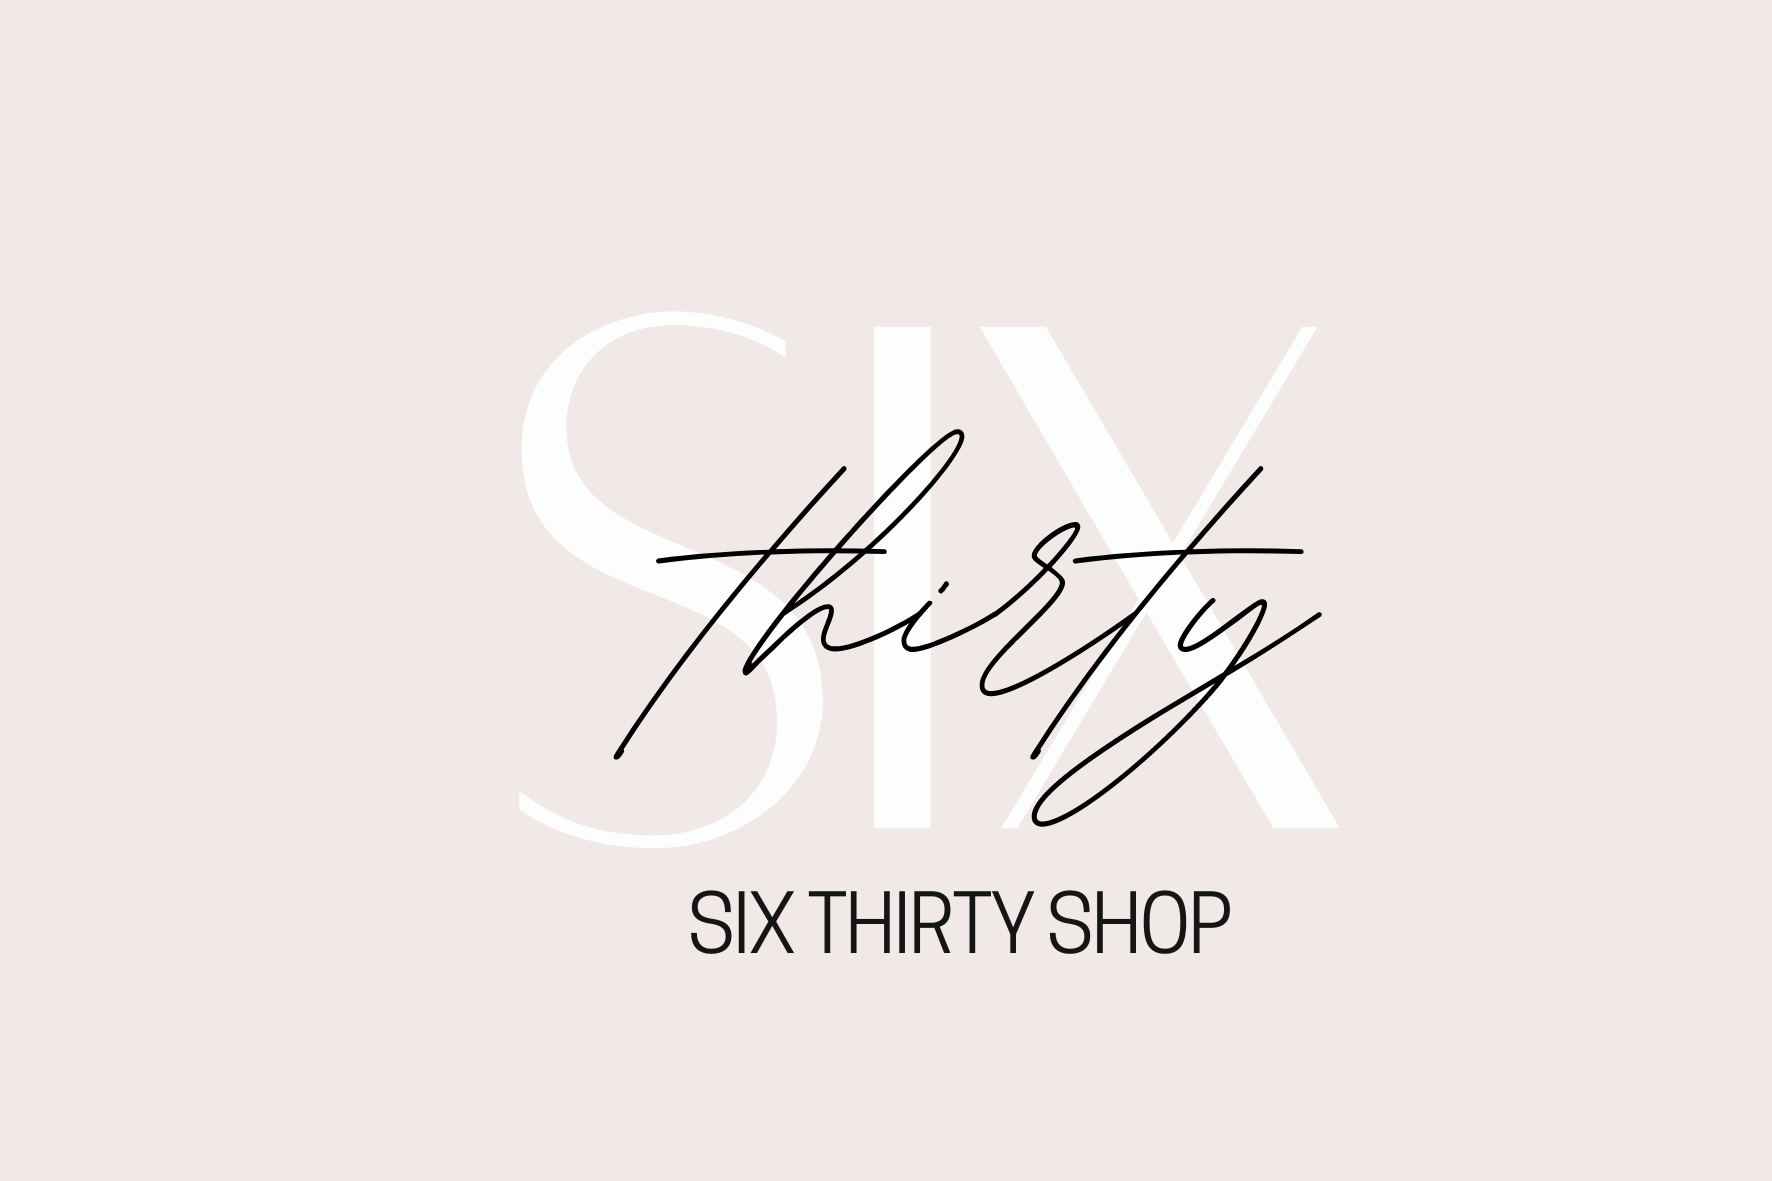 SixThirty Shop